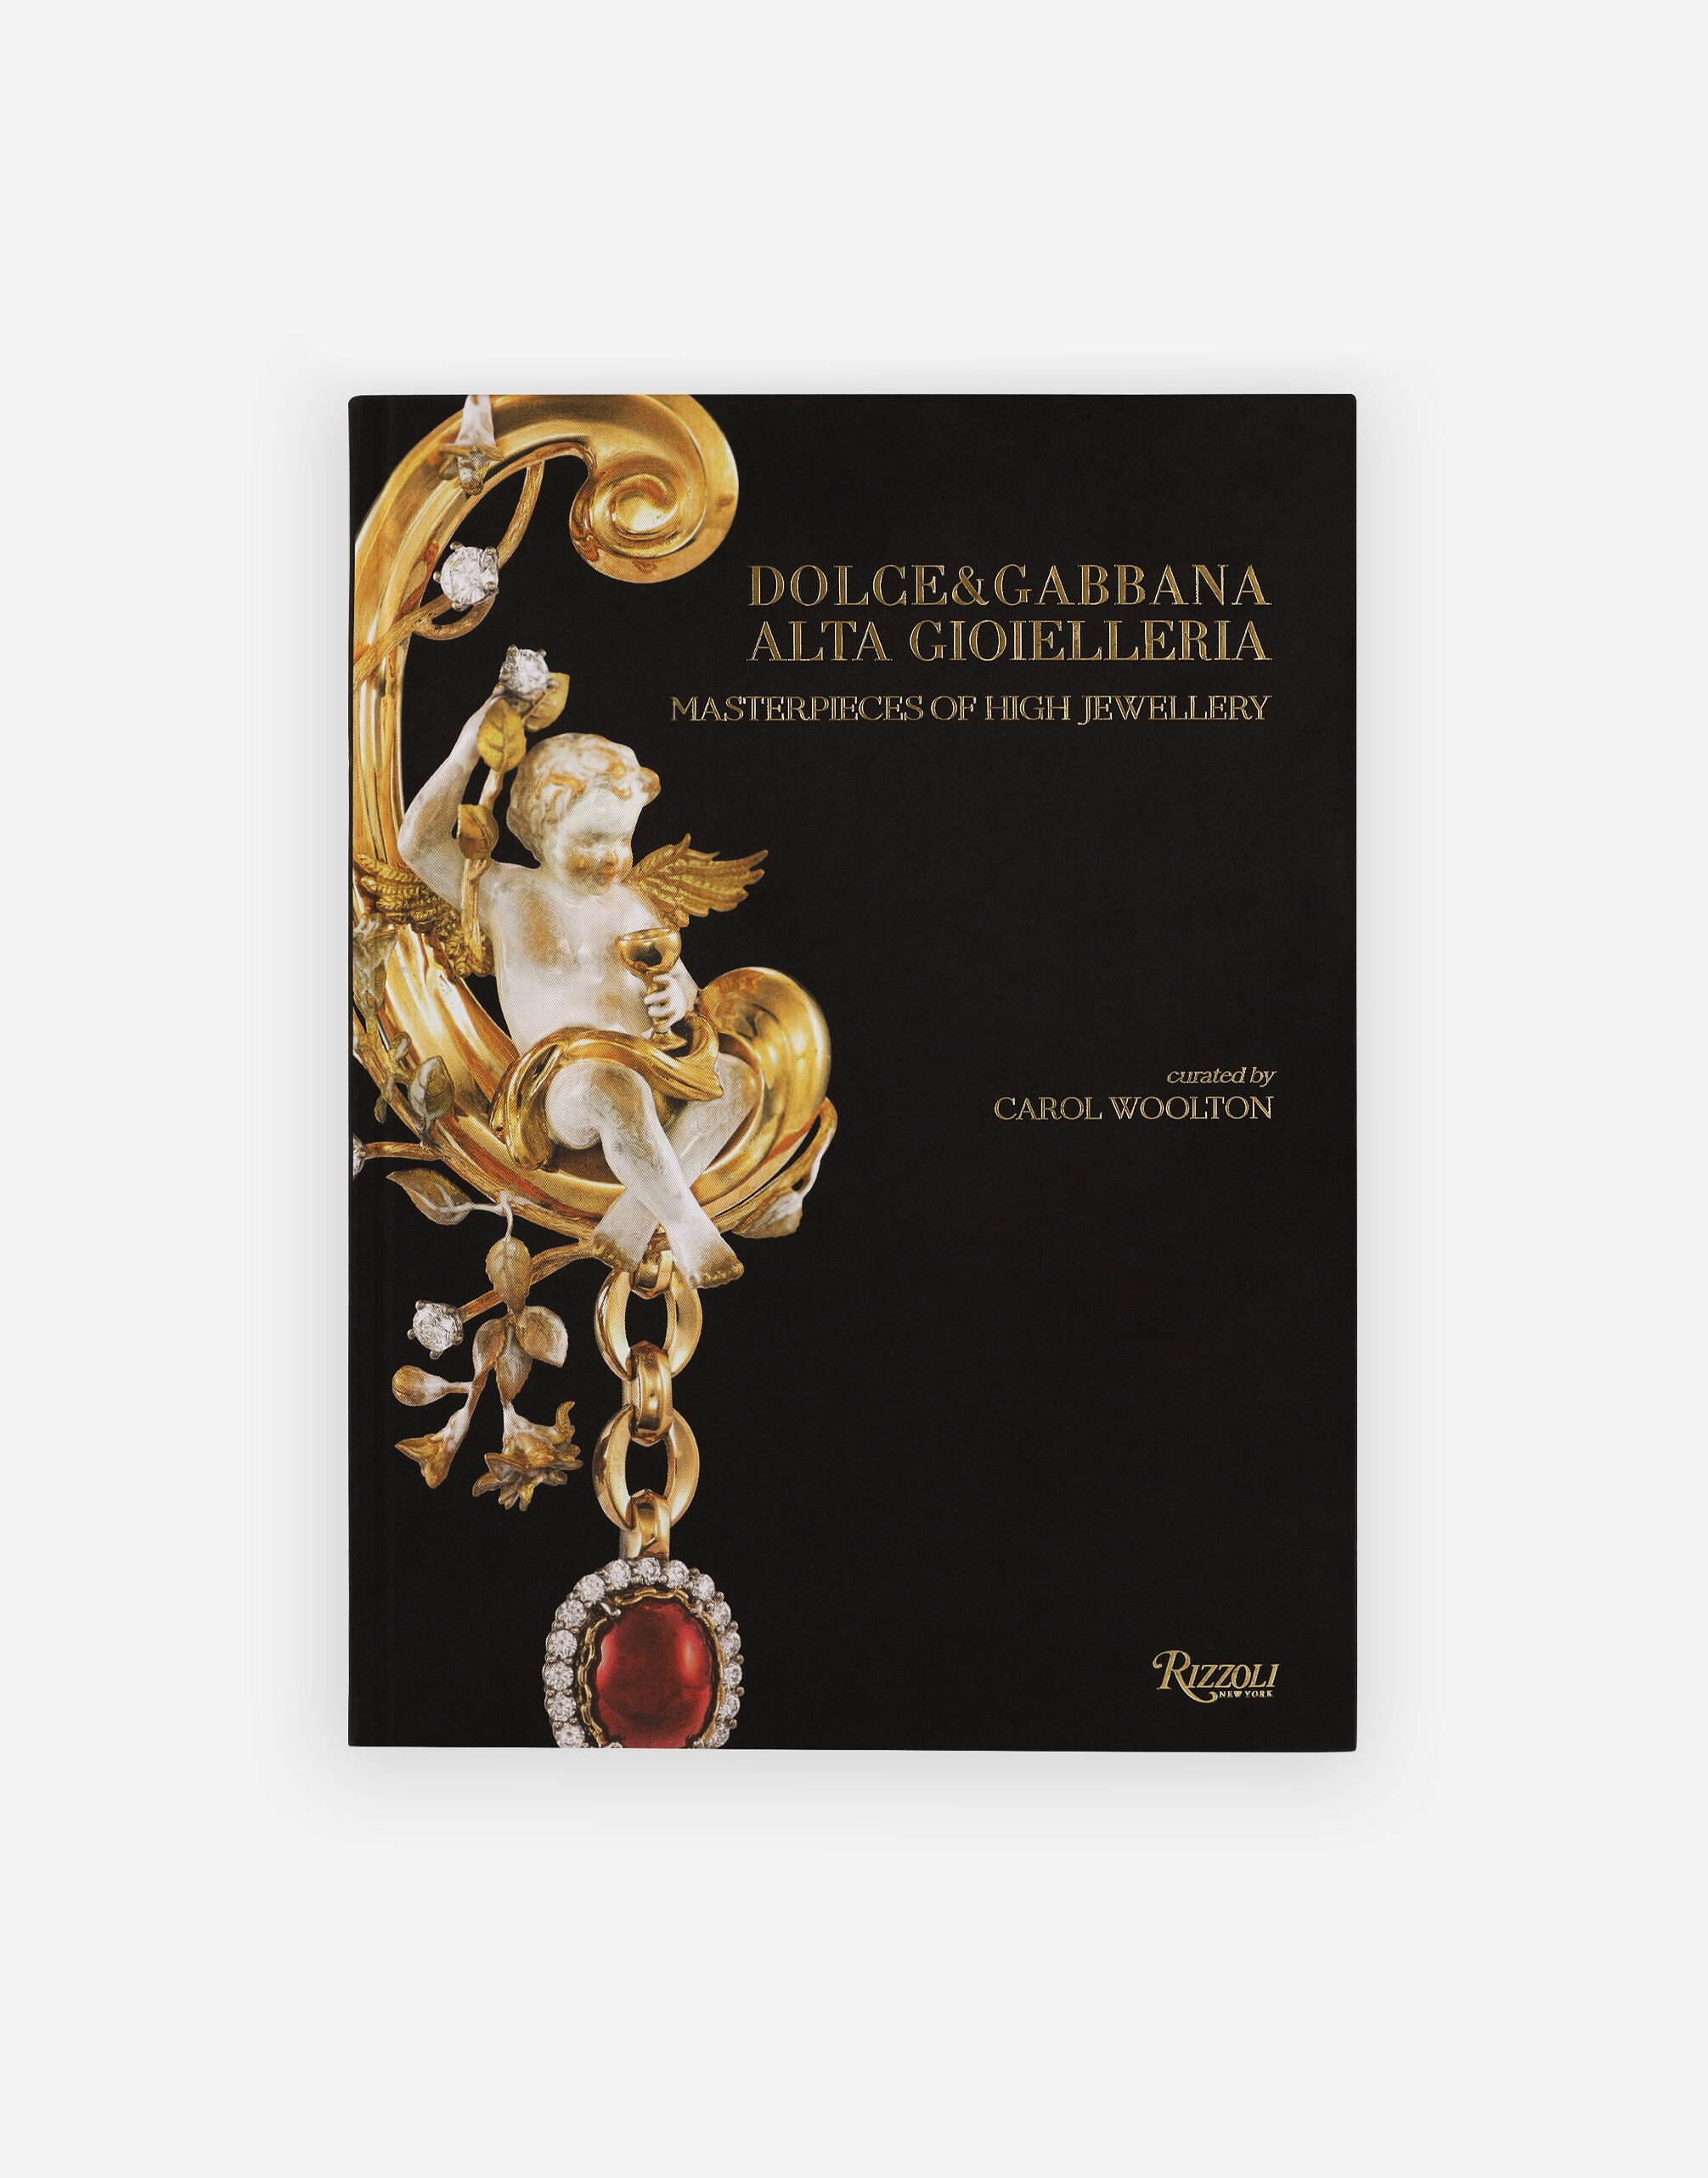 Dolce & Gabbana Dolce & Gabbana Alta Gioielleria: Masterpieces of High Jewellery 405 Devotion MKUPLIP0009